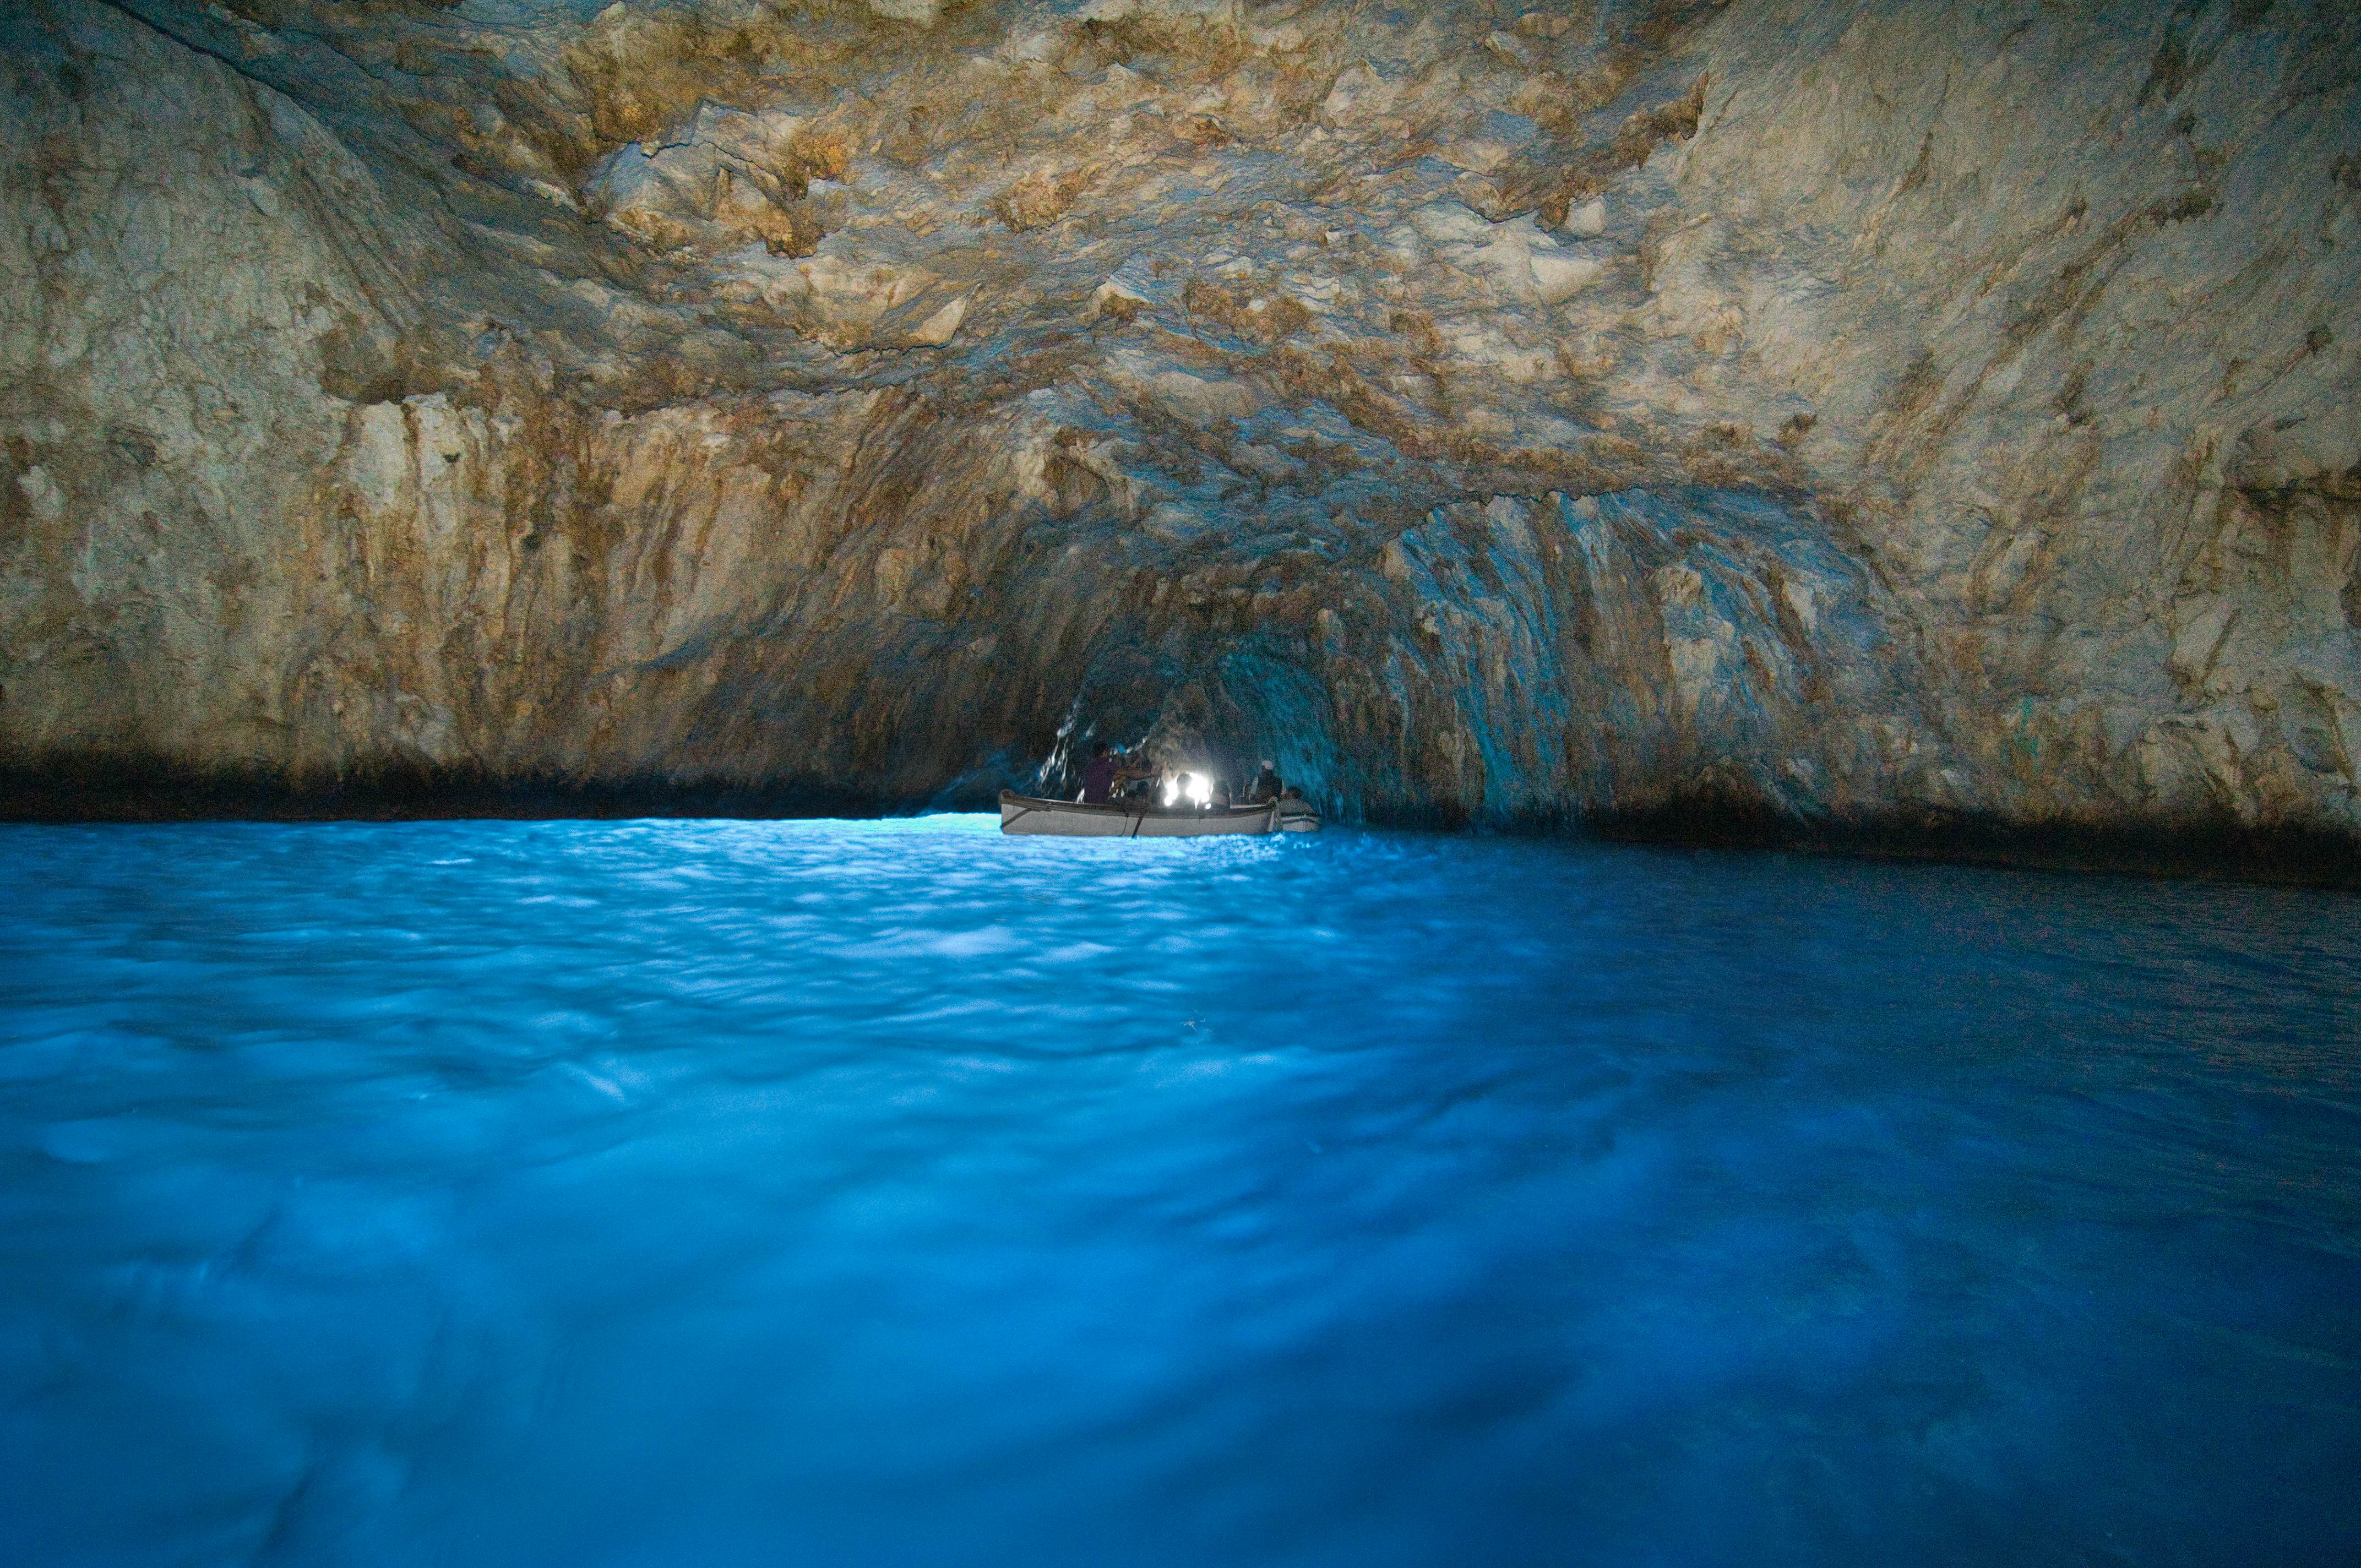 Blue Grotto Capri Italy - Grotta Azzurra